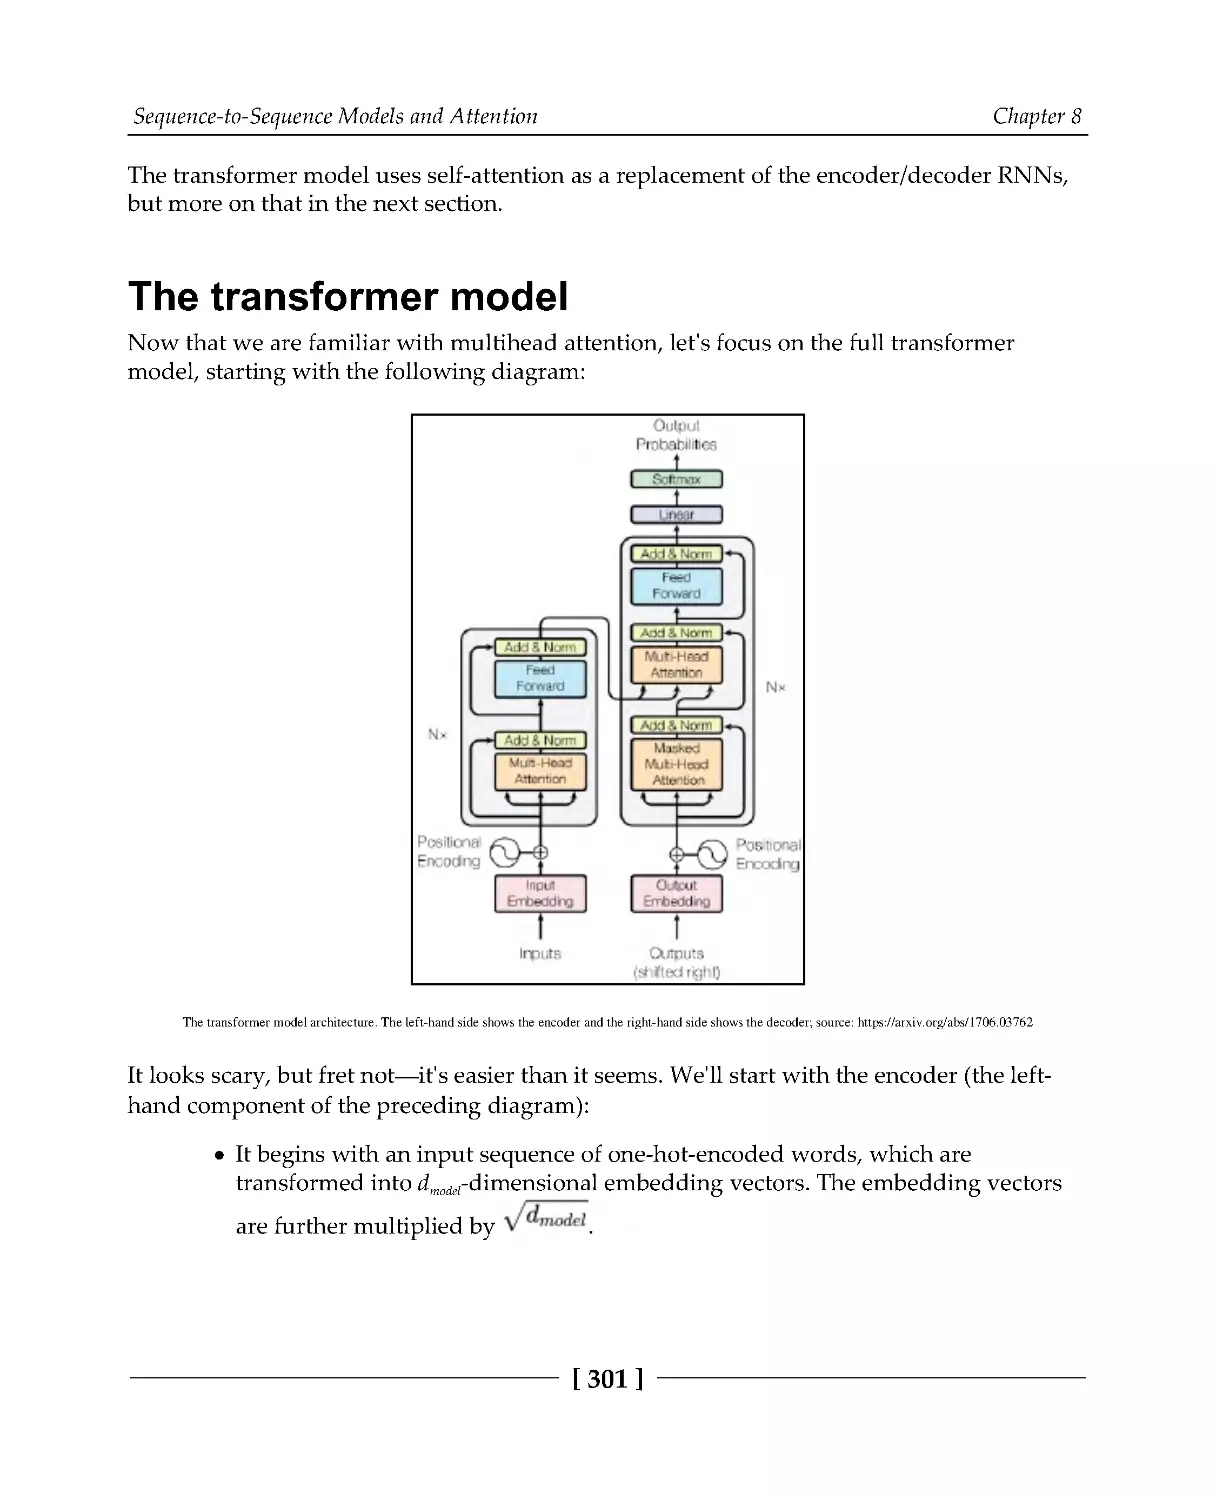 The transformer model